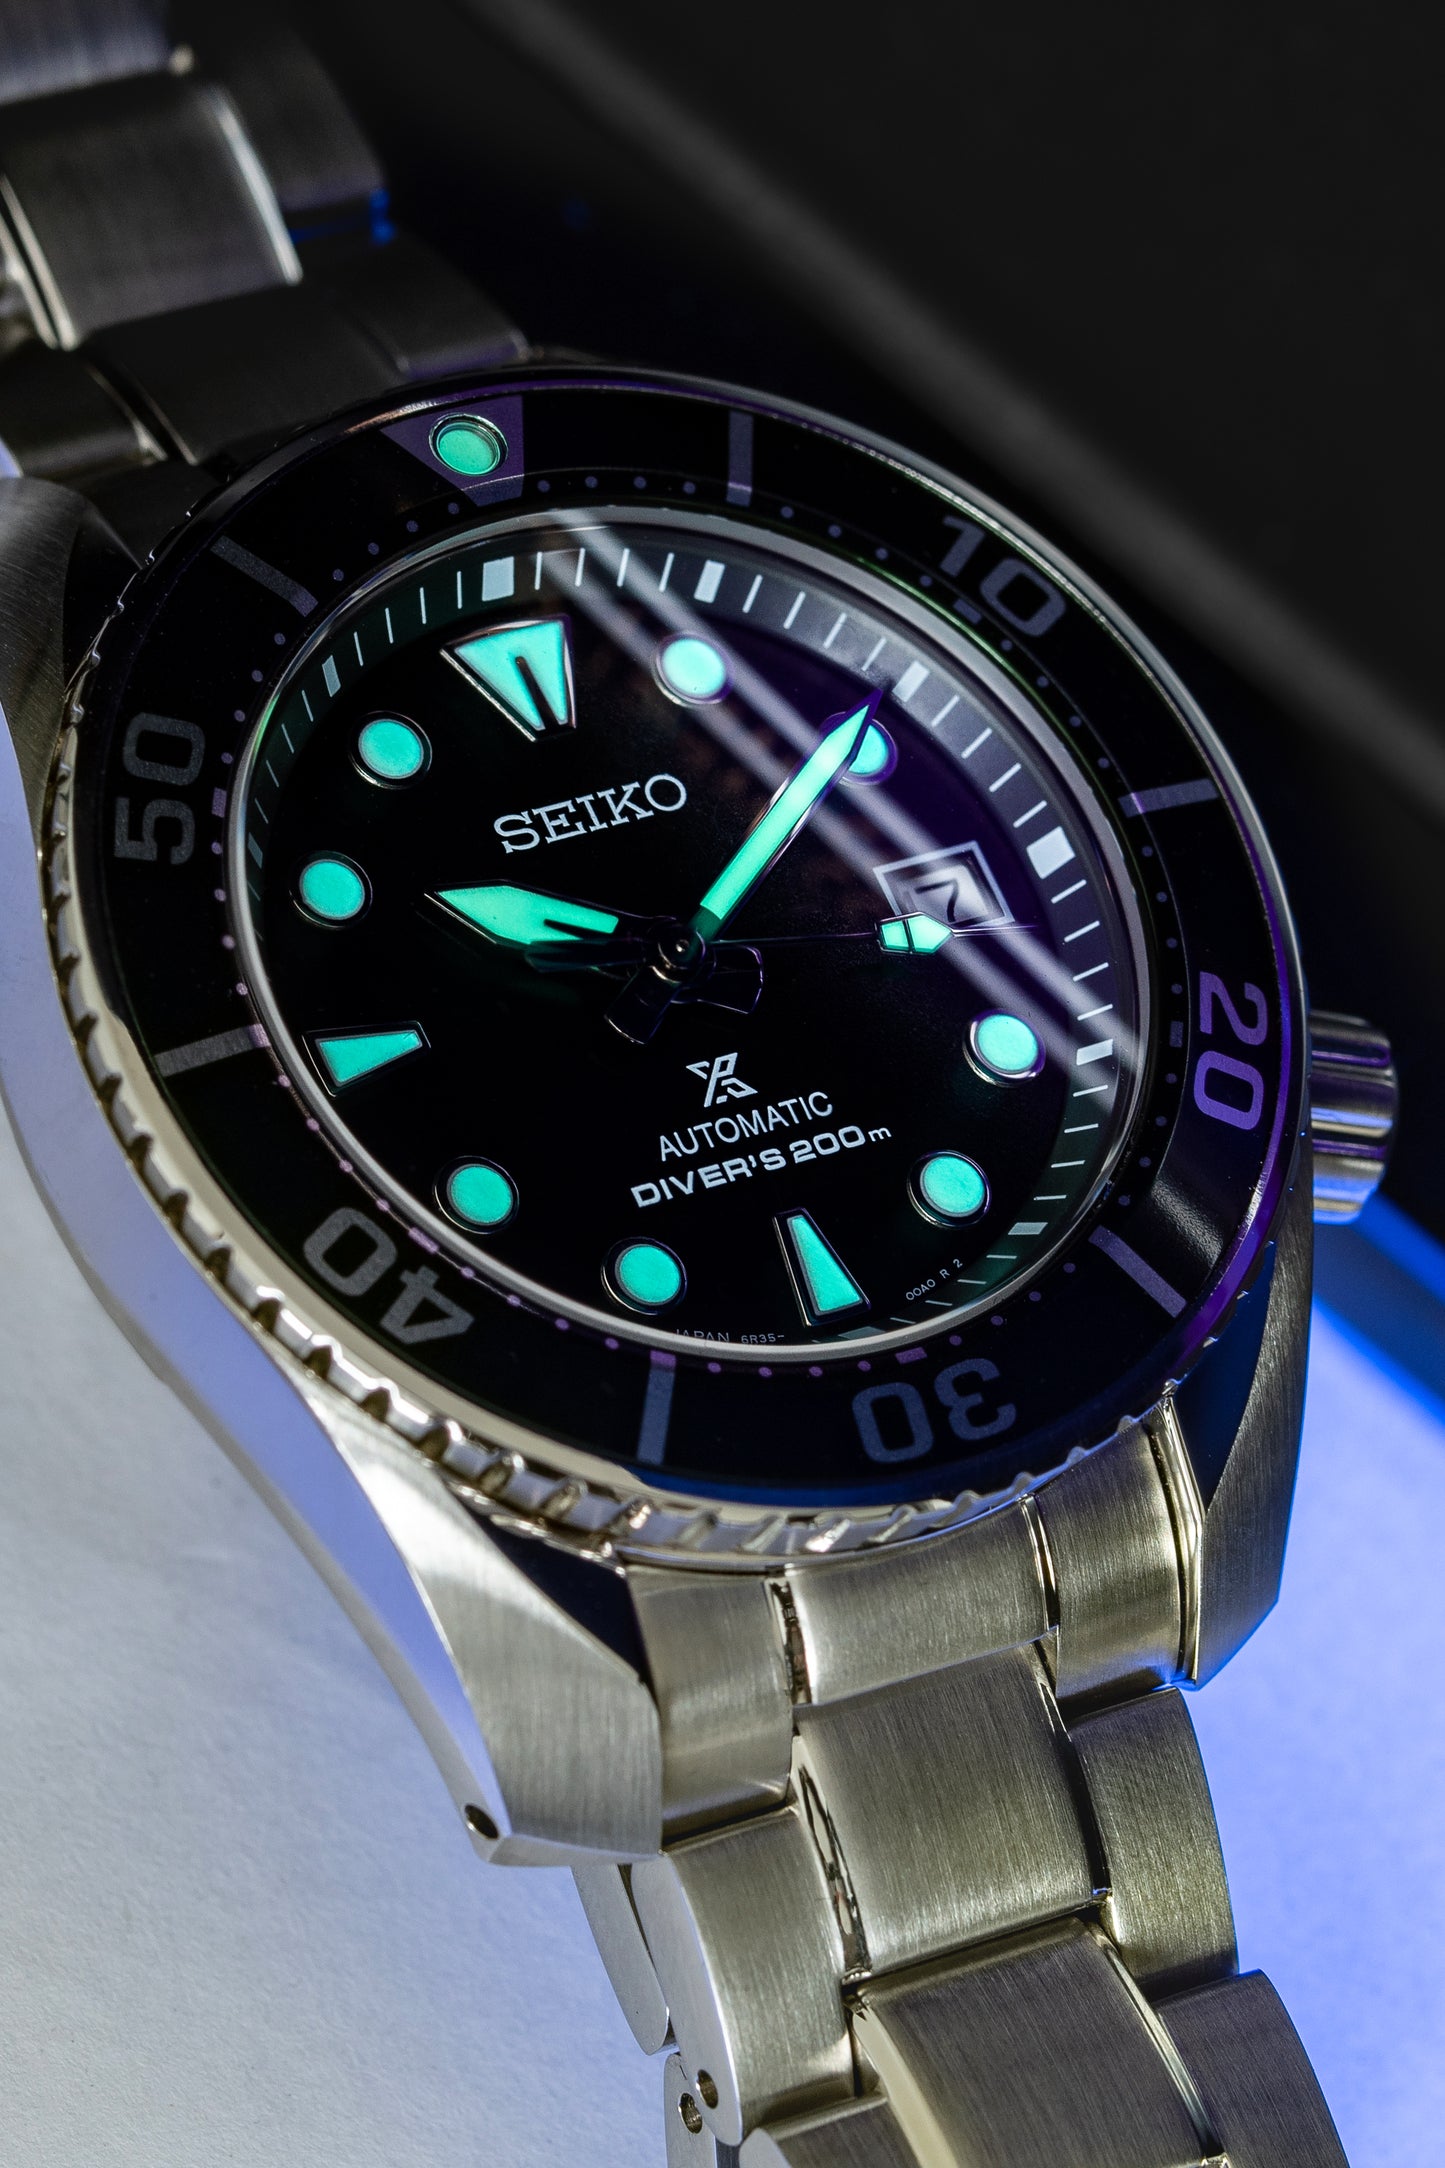 SEIKO SPB103J1 Prospex Samurai Automatic Men's Dive Watch – Green Dial